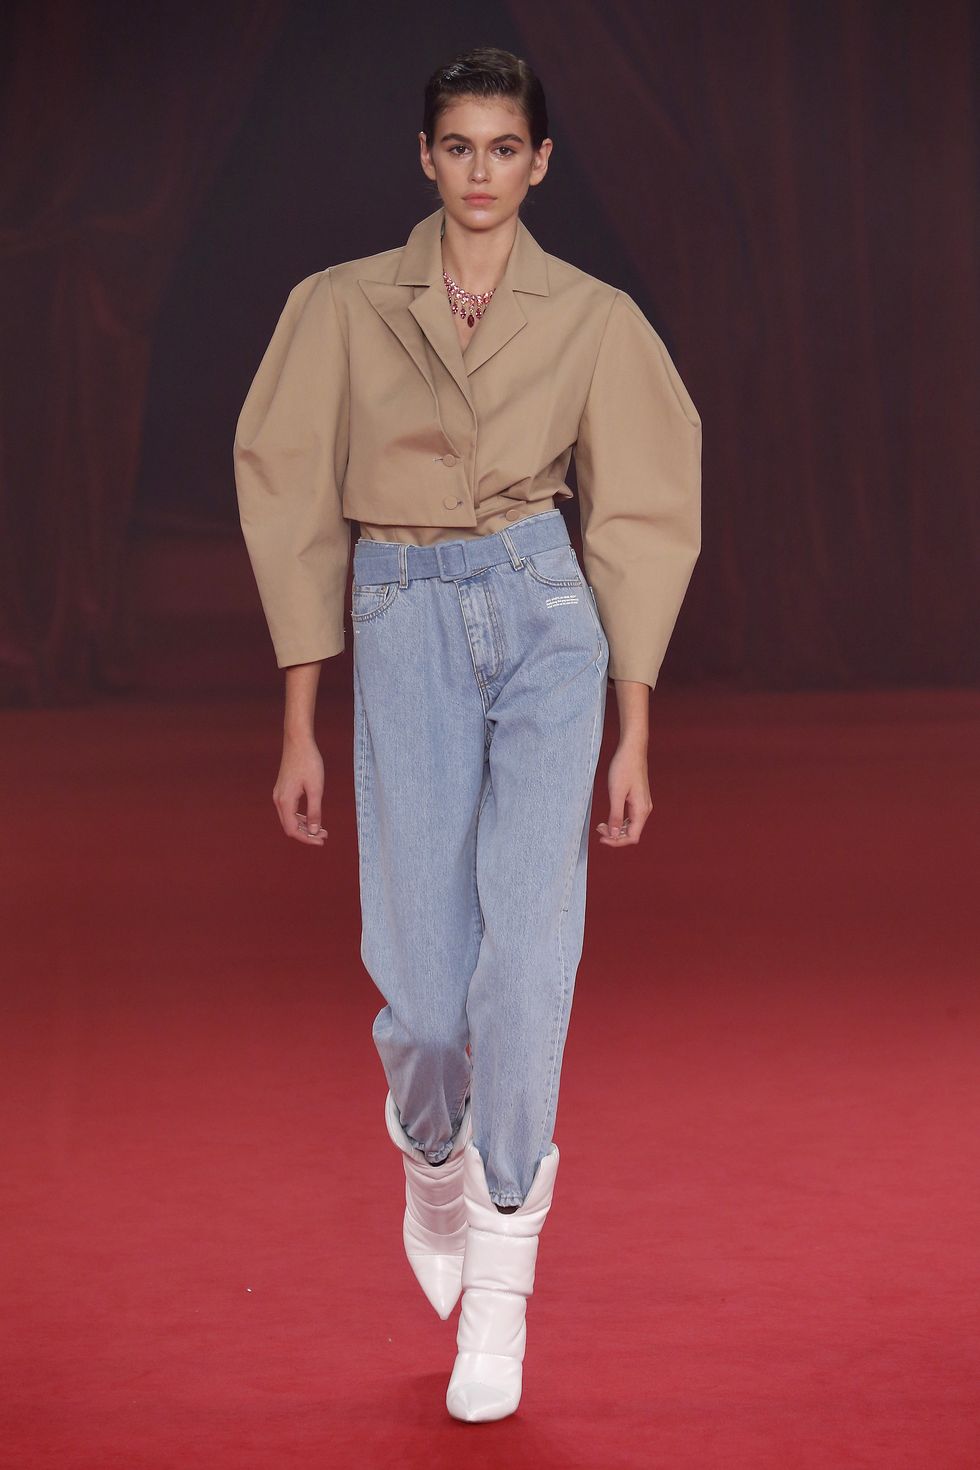 Janaye Furman walks the runway during the Louis Vuitton Womenswear News  Photo - Getty Images